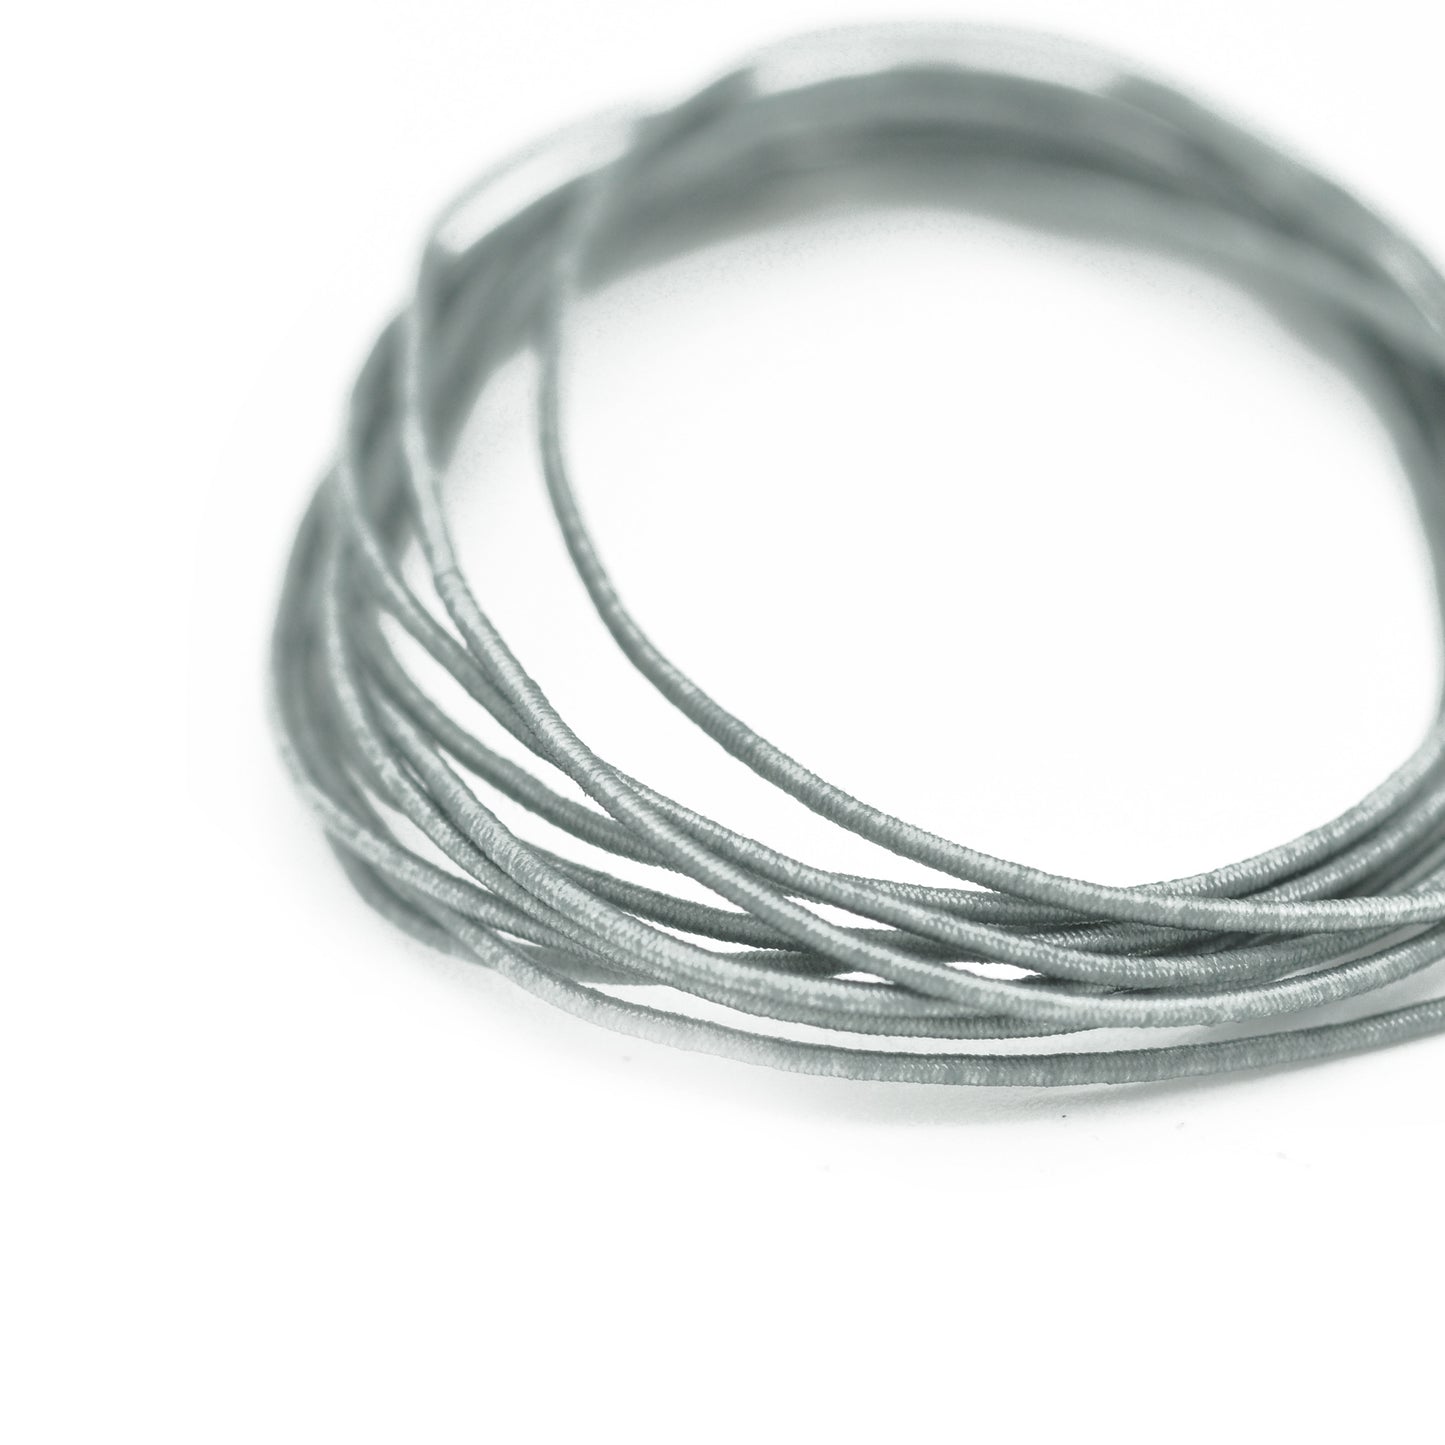 Elastic fabric tape gray 1.5m / Ø 1mm